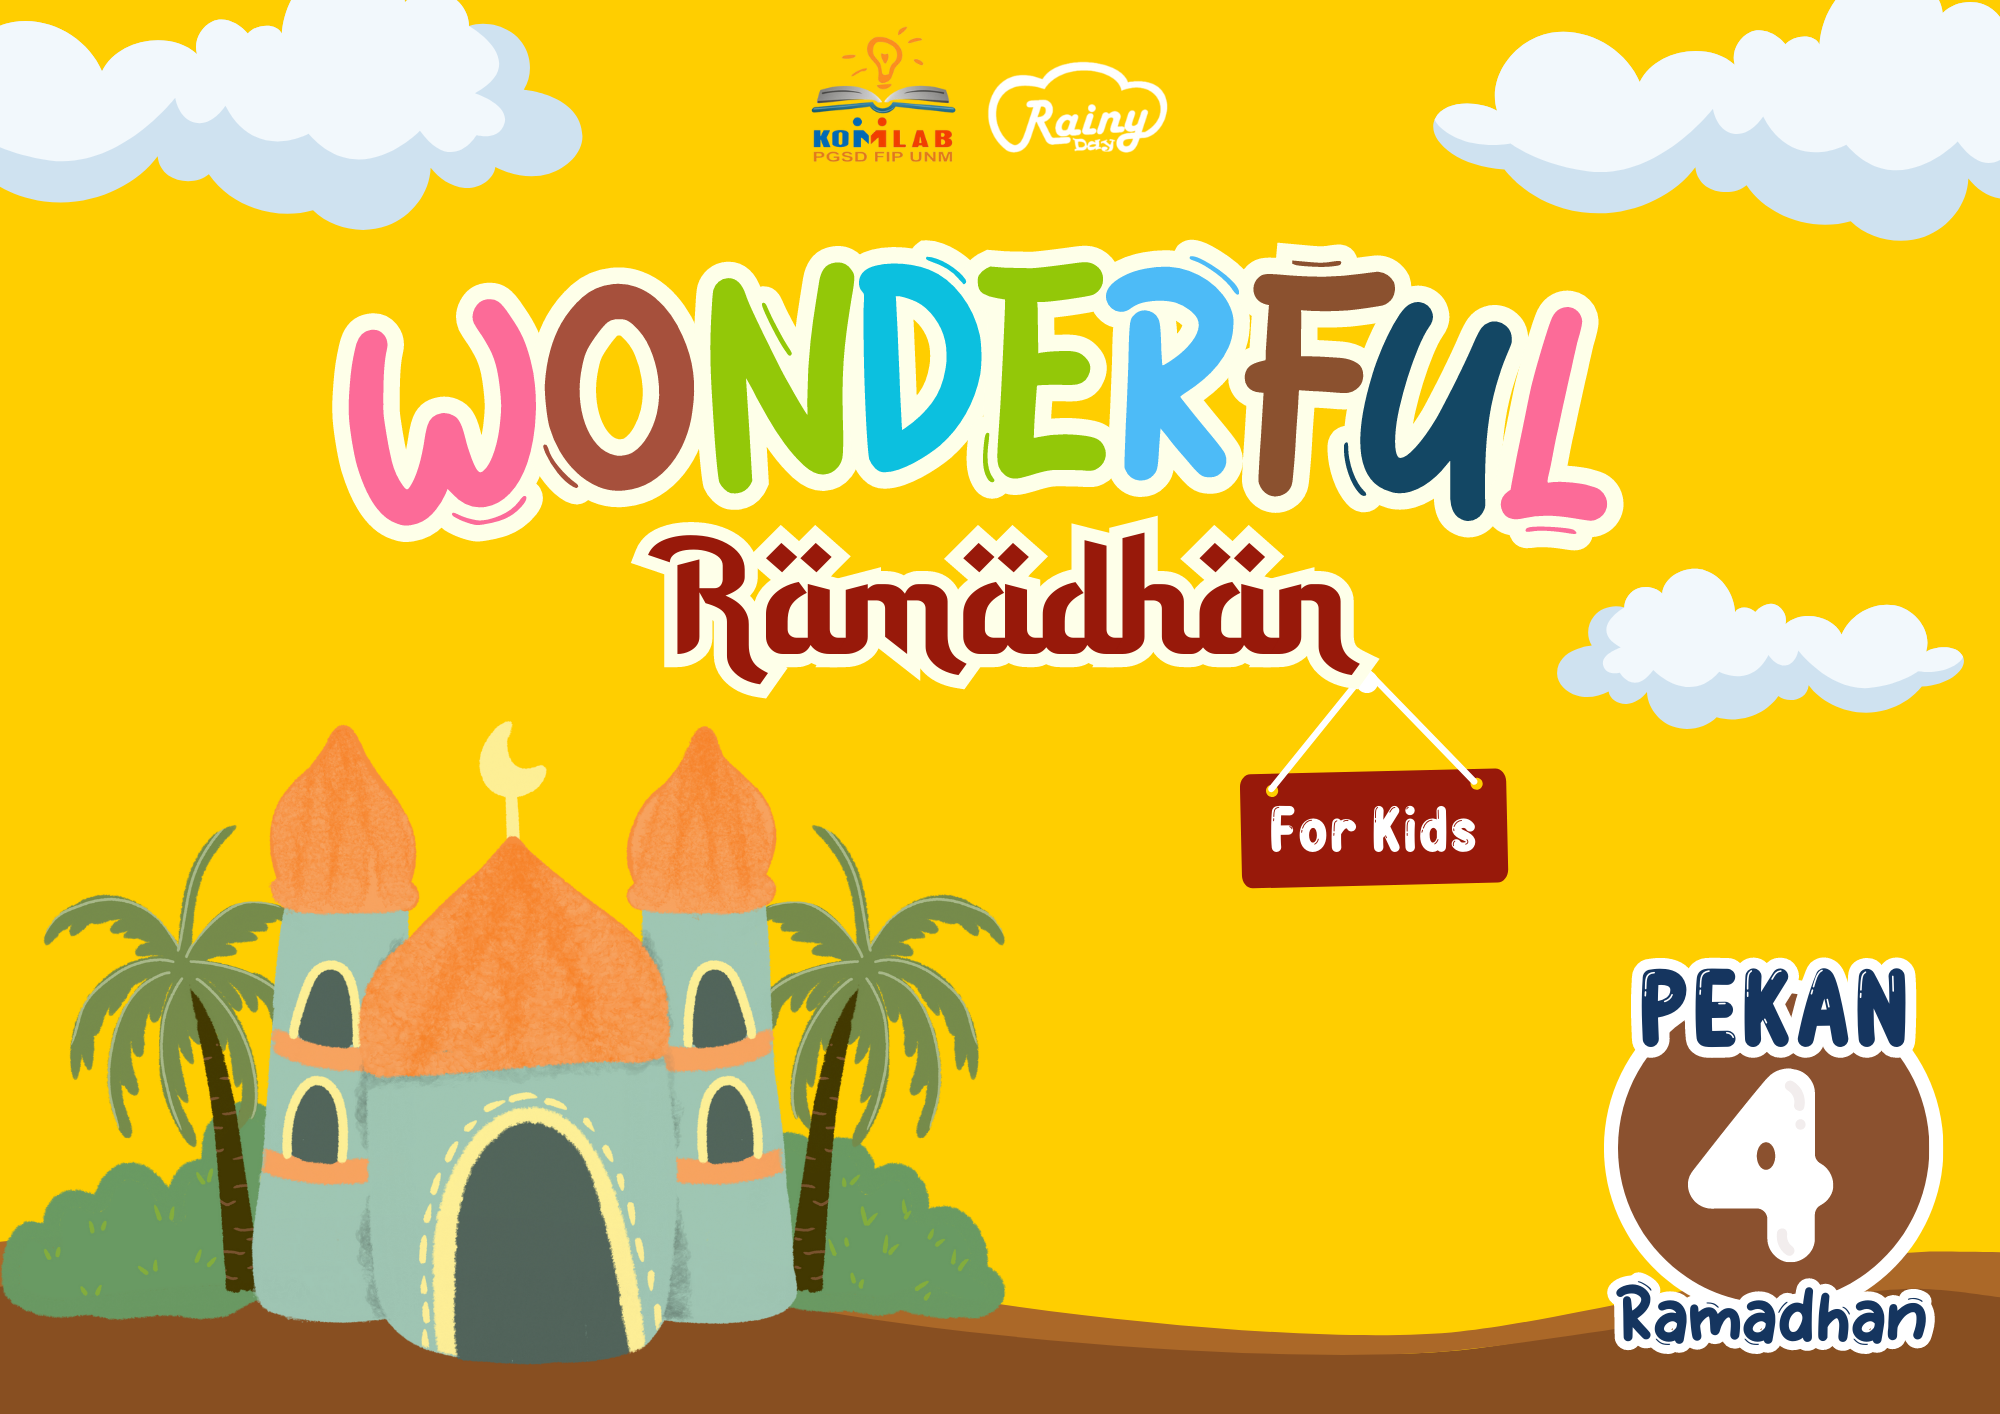 Wonderful Ramadhan 1